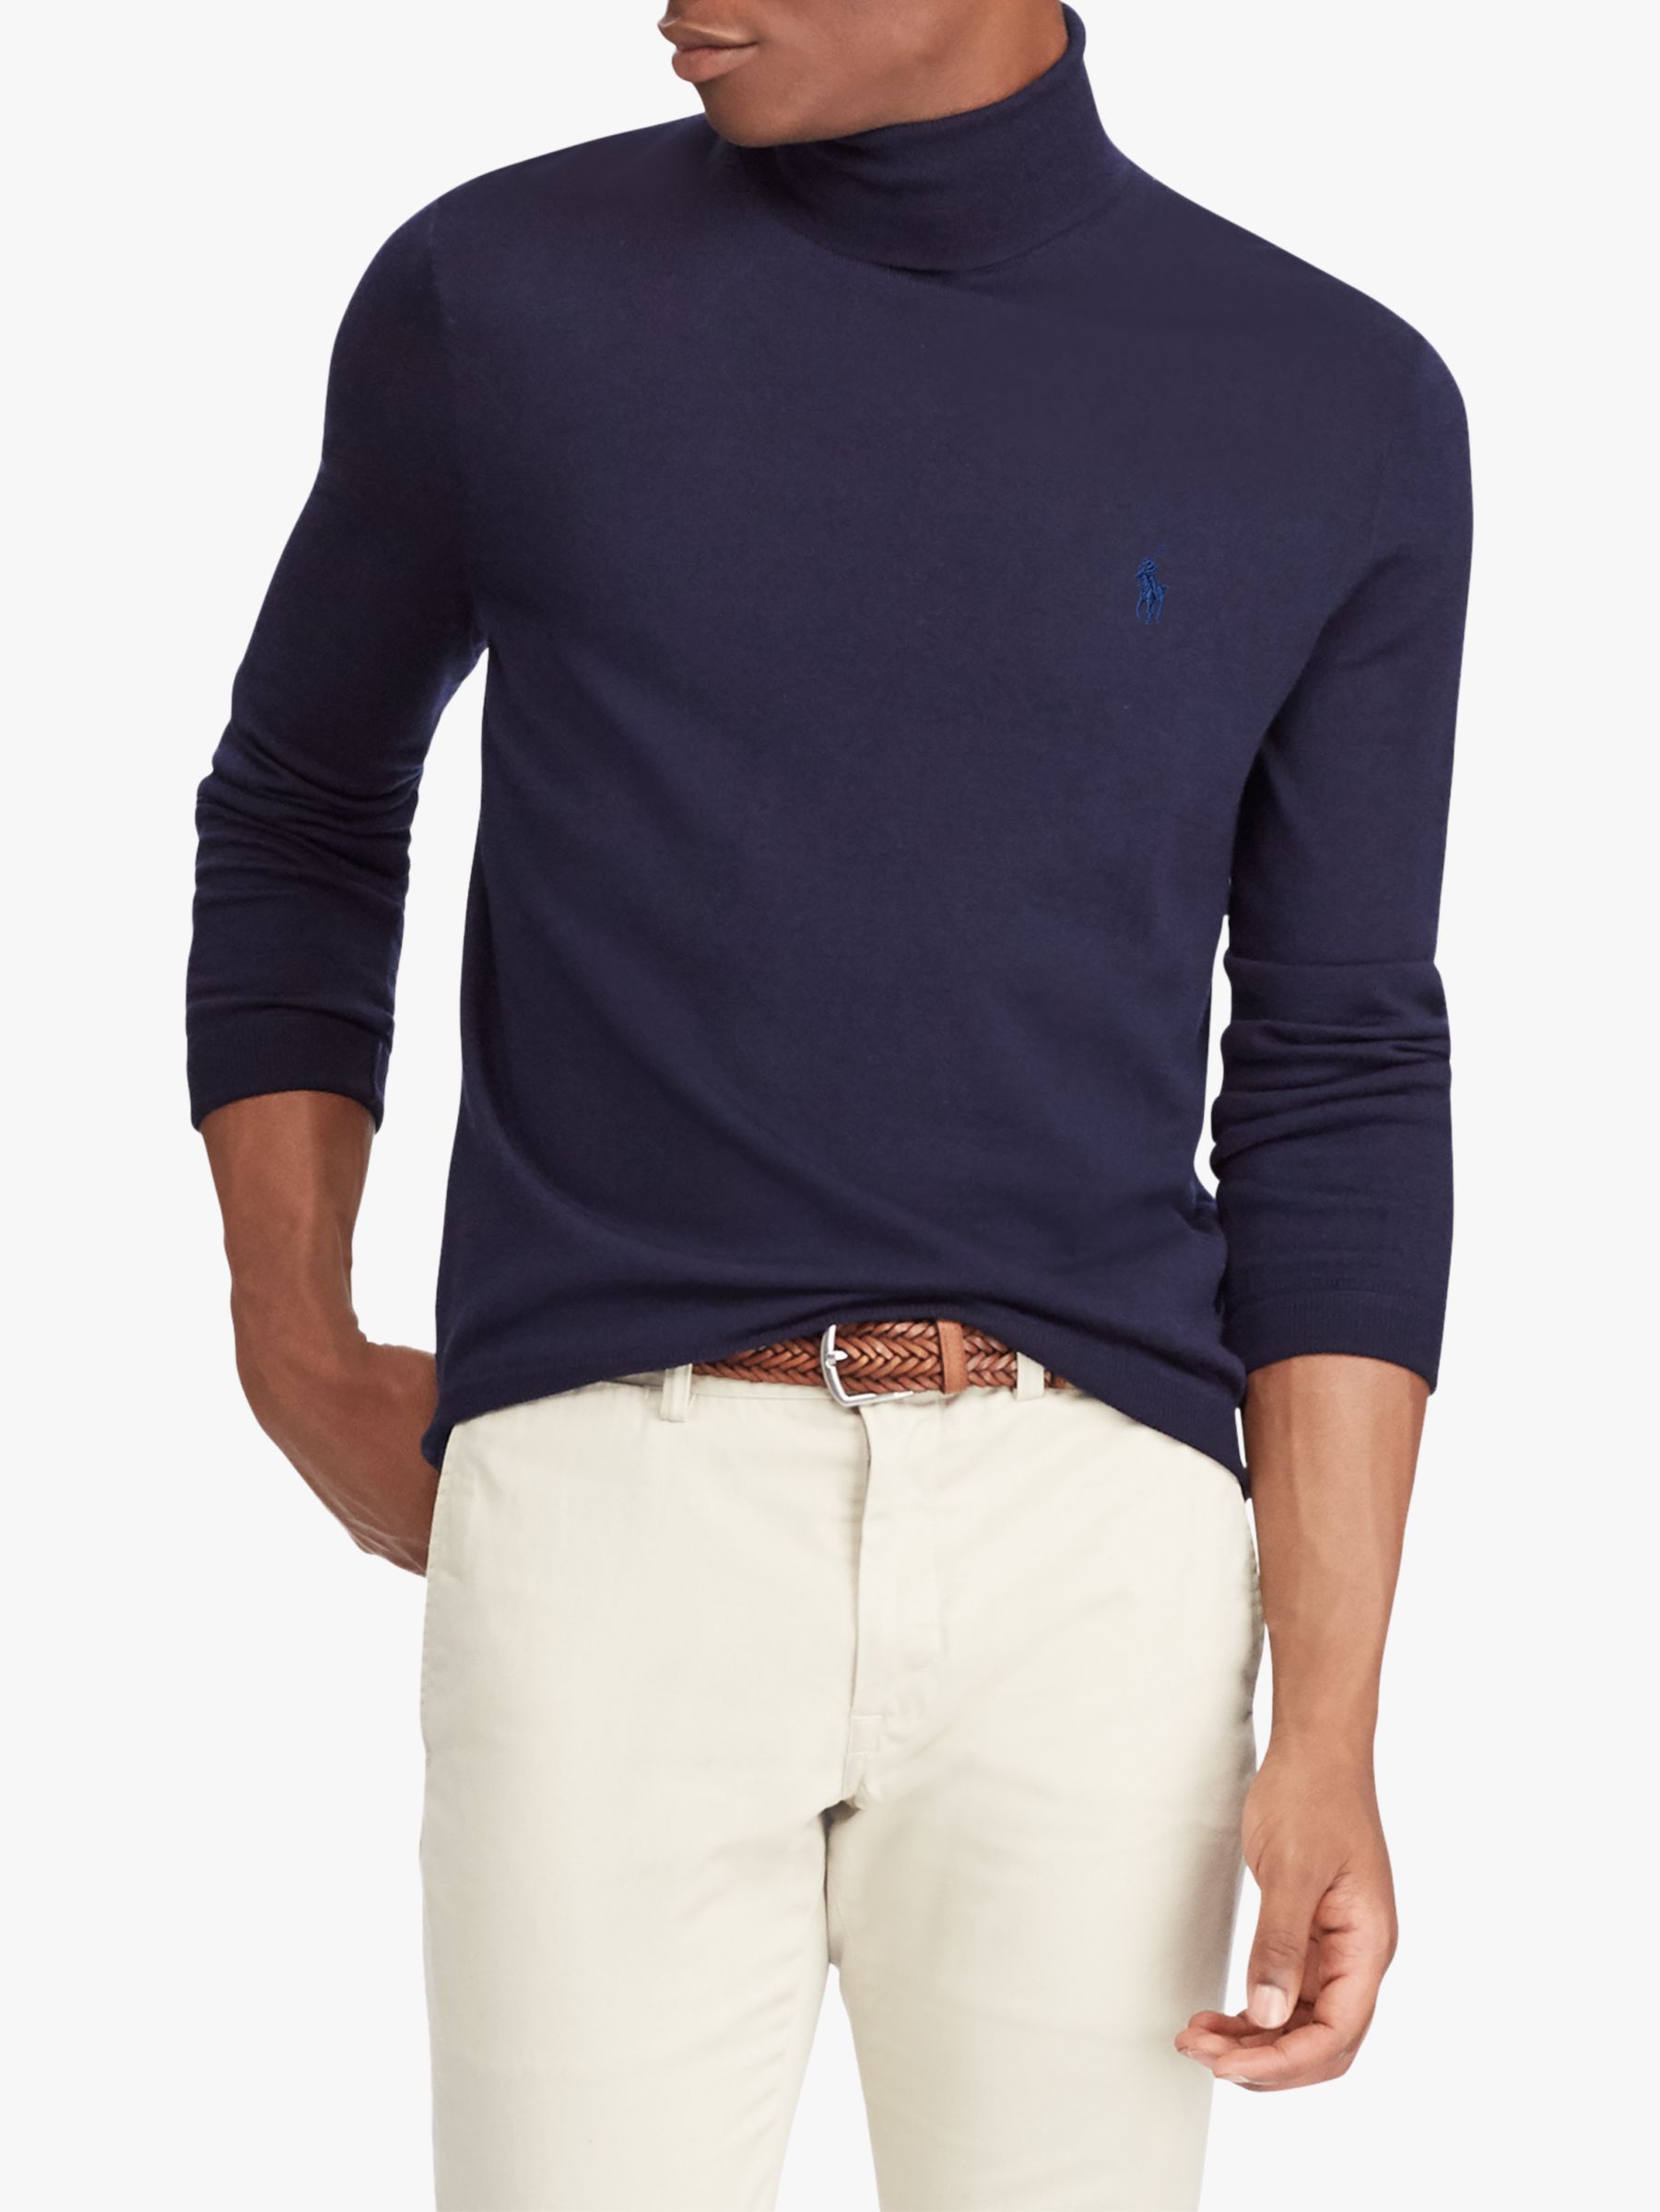 polo turtleneck sweater